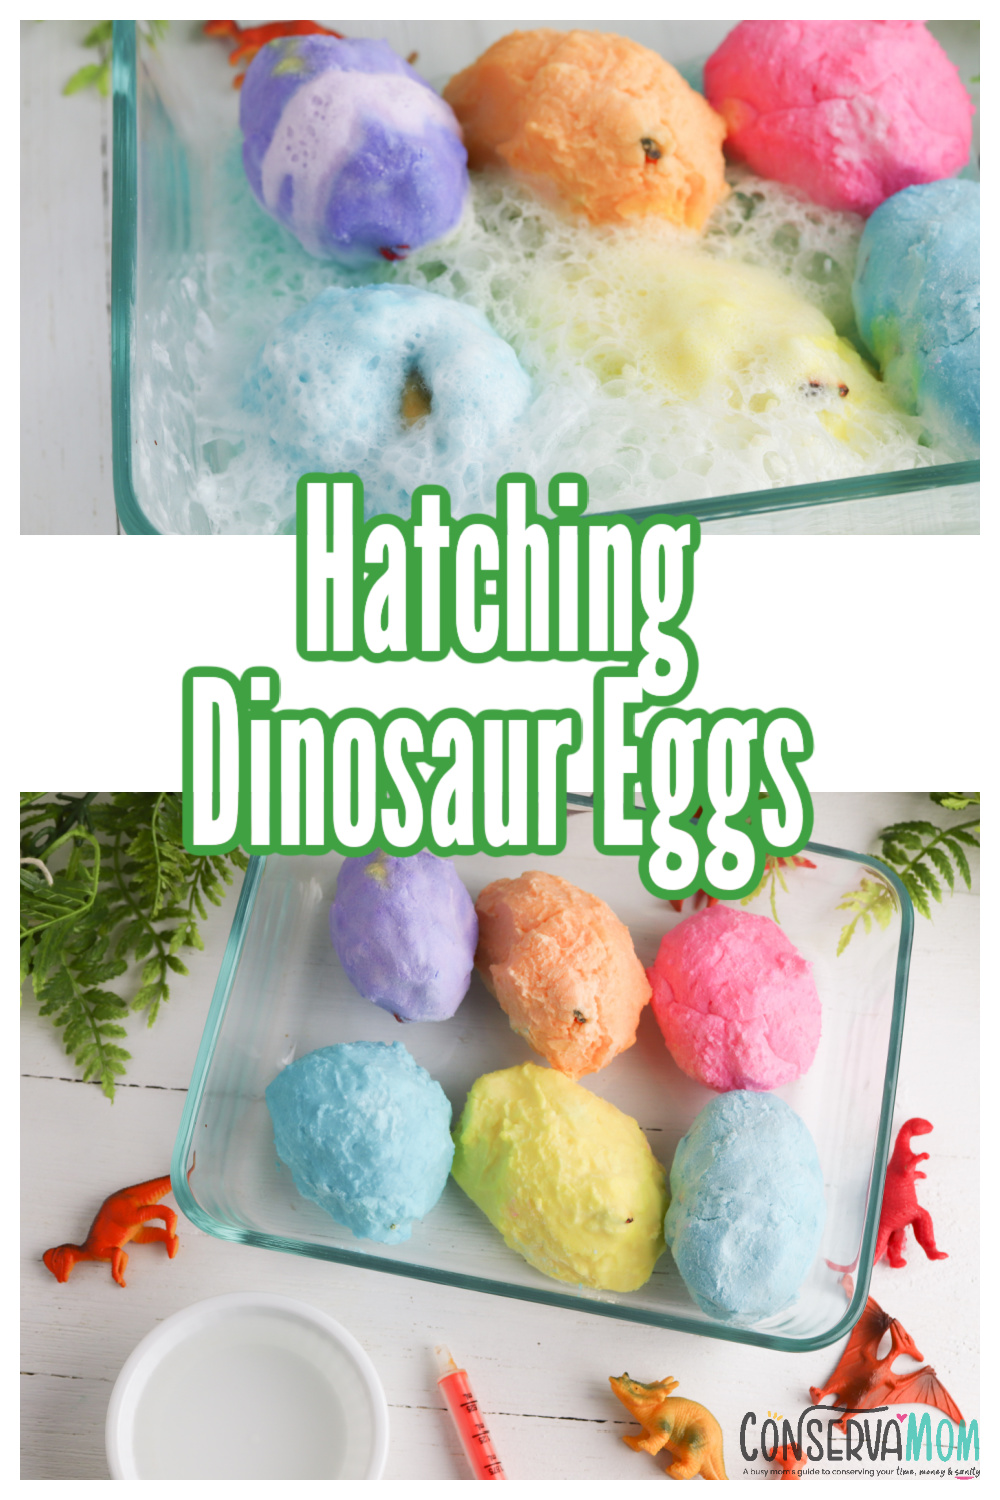 Hatching dinosaur eggs recipe